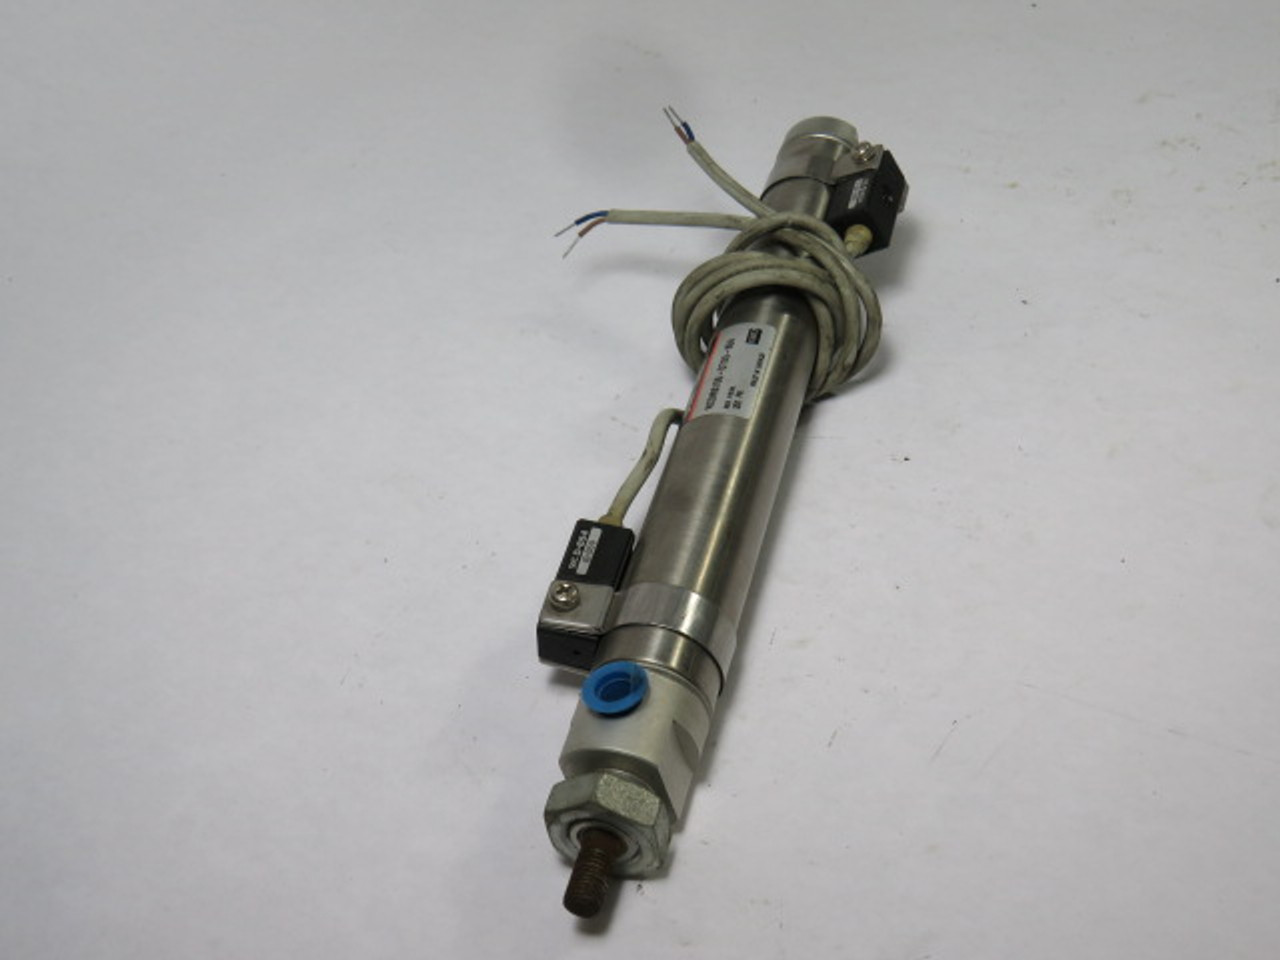 SMC NCDMB106-0700-B54 Pneumatic Air Cylinder 1-1/16" Bore 7" Stroke 250PSI USED